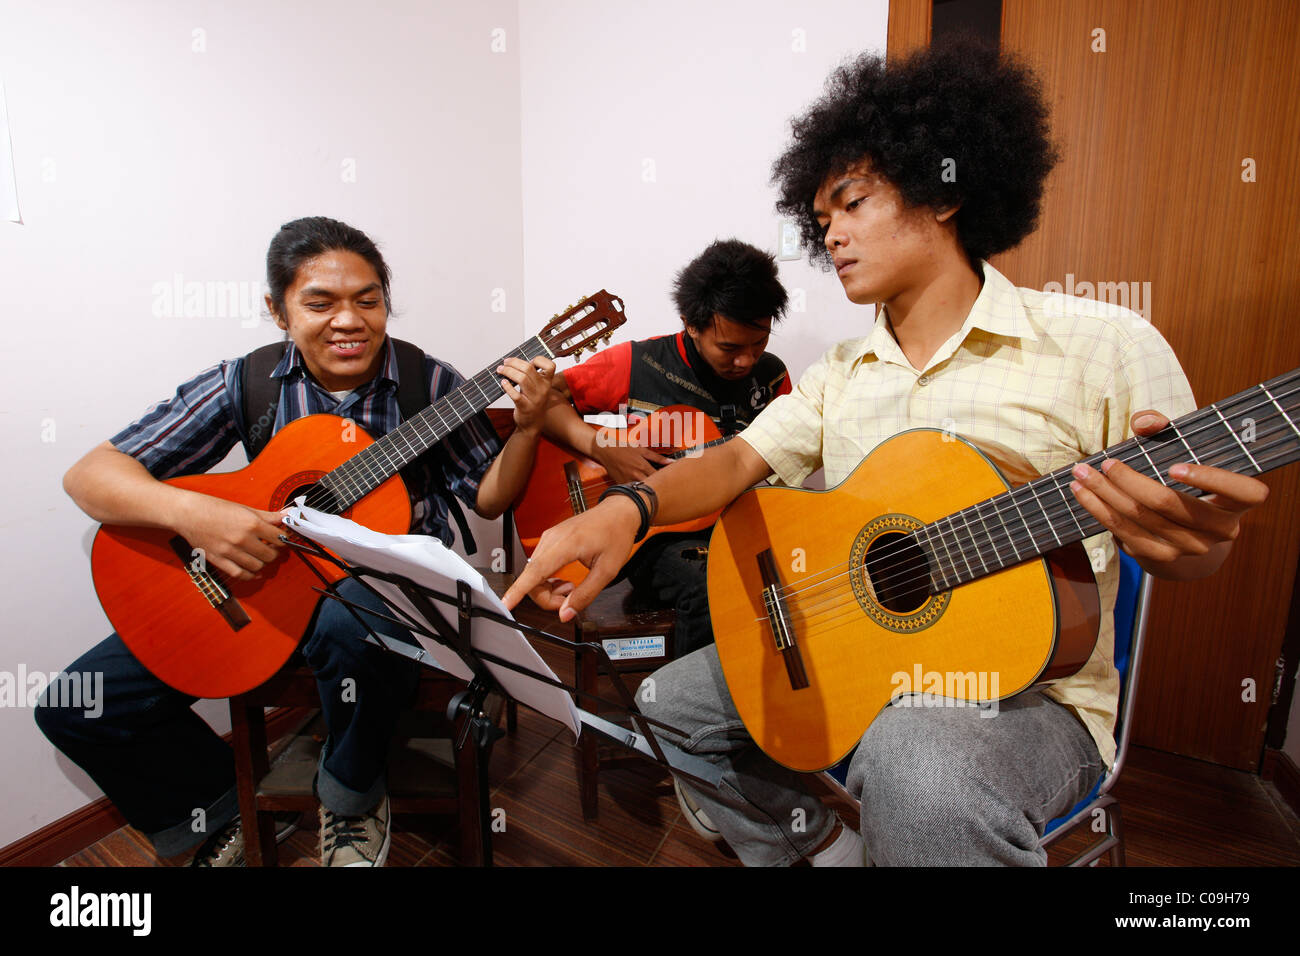 Students learning to play guitar, HKBP Nommensen University, Medan, Sumatra island, Indonesia, Asia Stock Photo